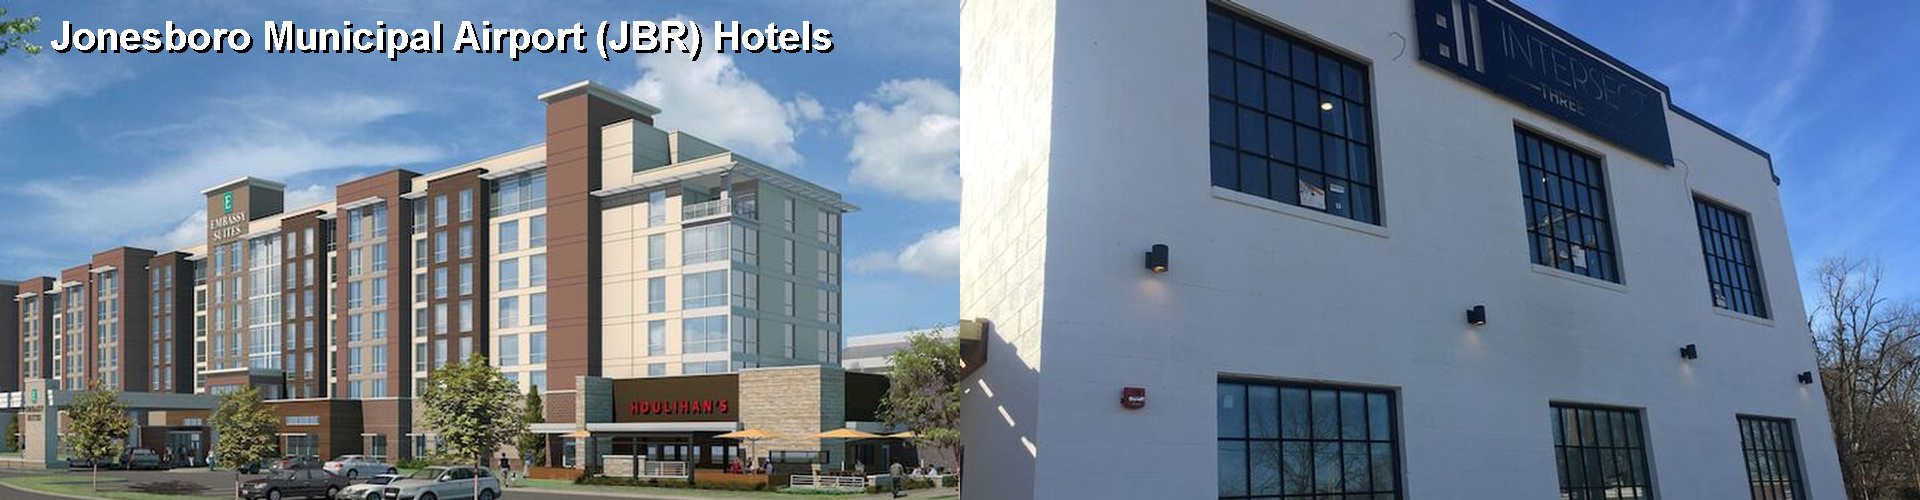 2 Best Hotels near Jonesboro Municipal Airport (JBR)